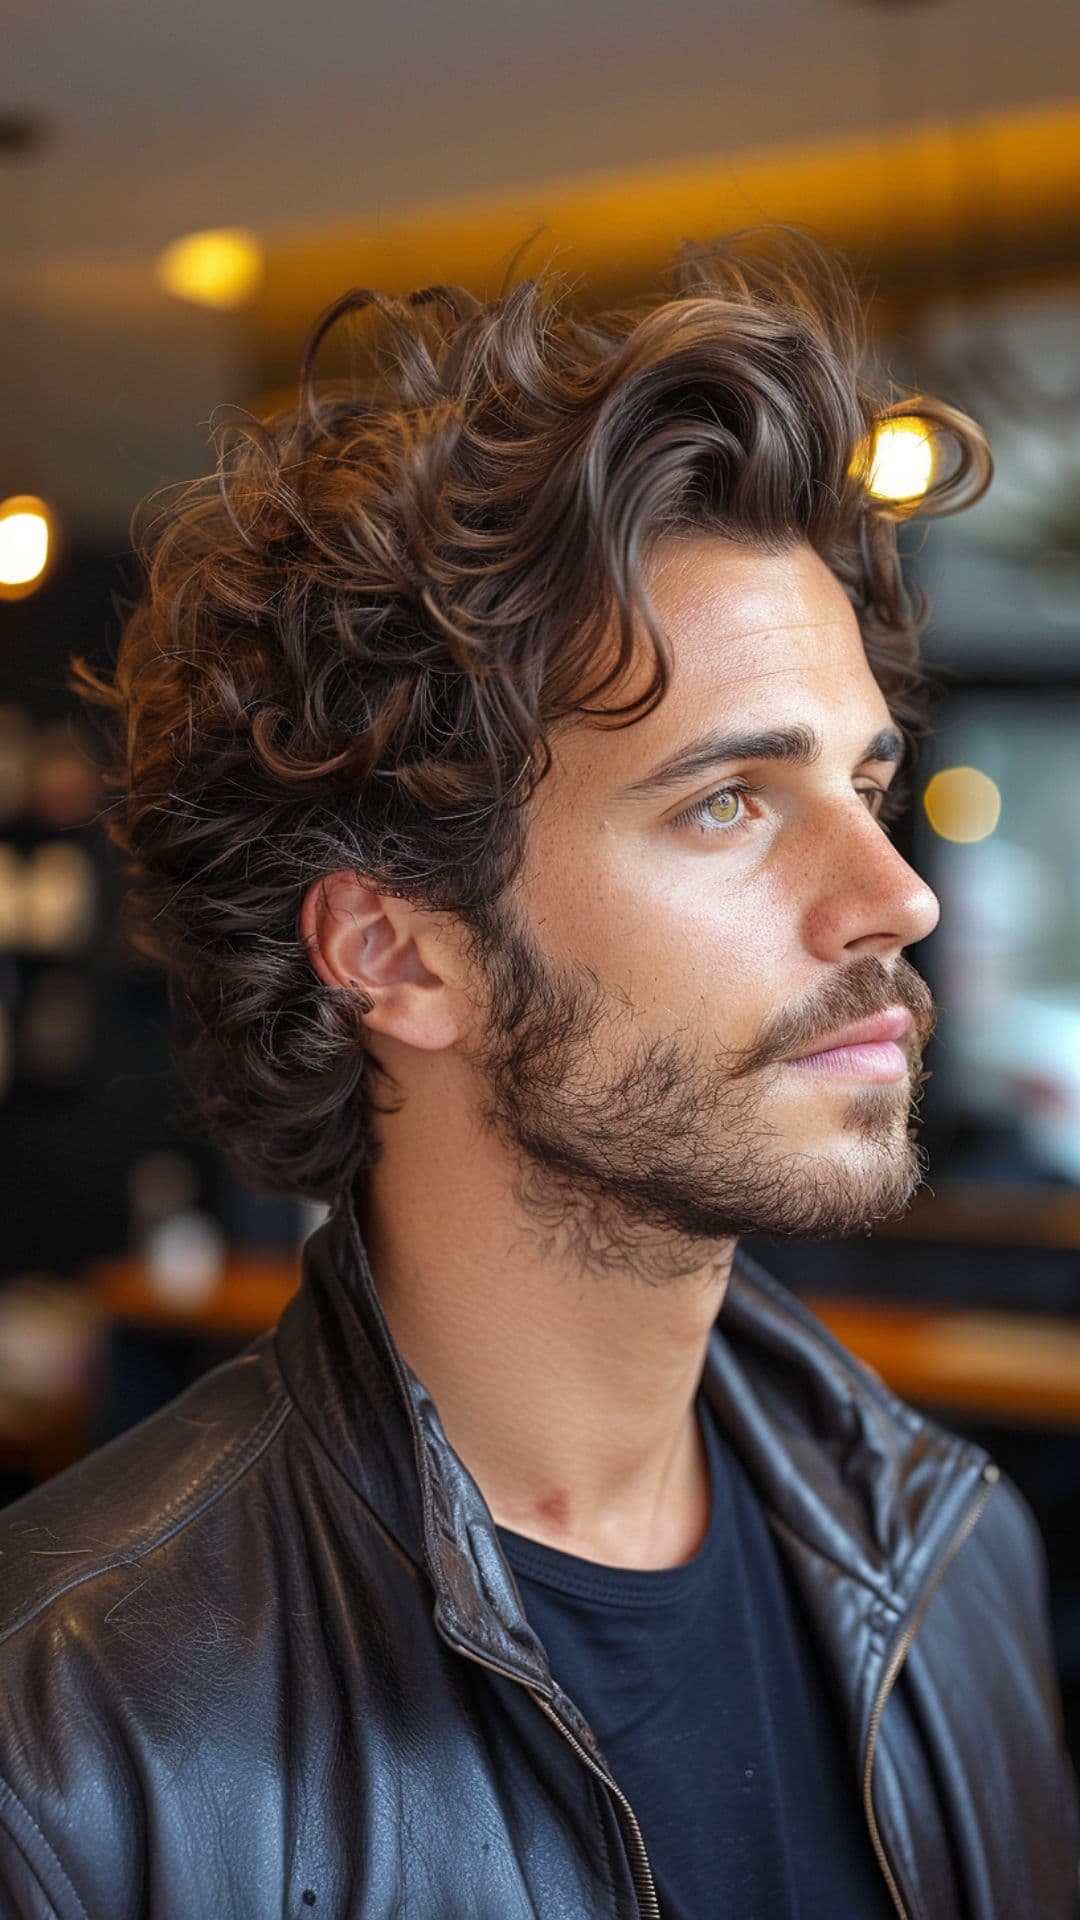 A man modelling a medium-length curly hair.